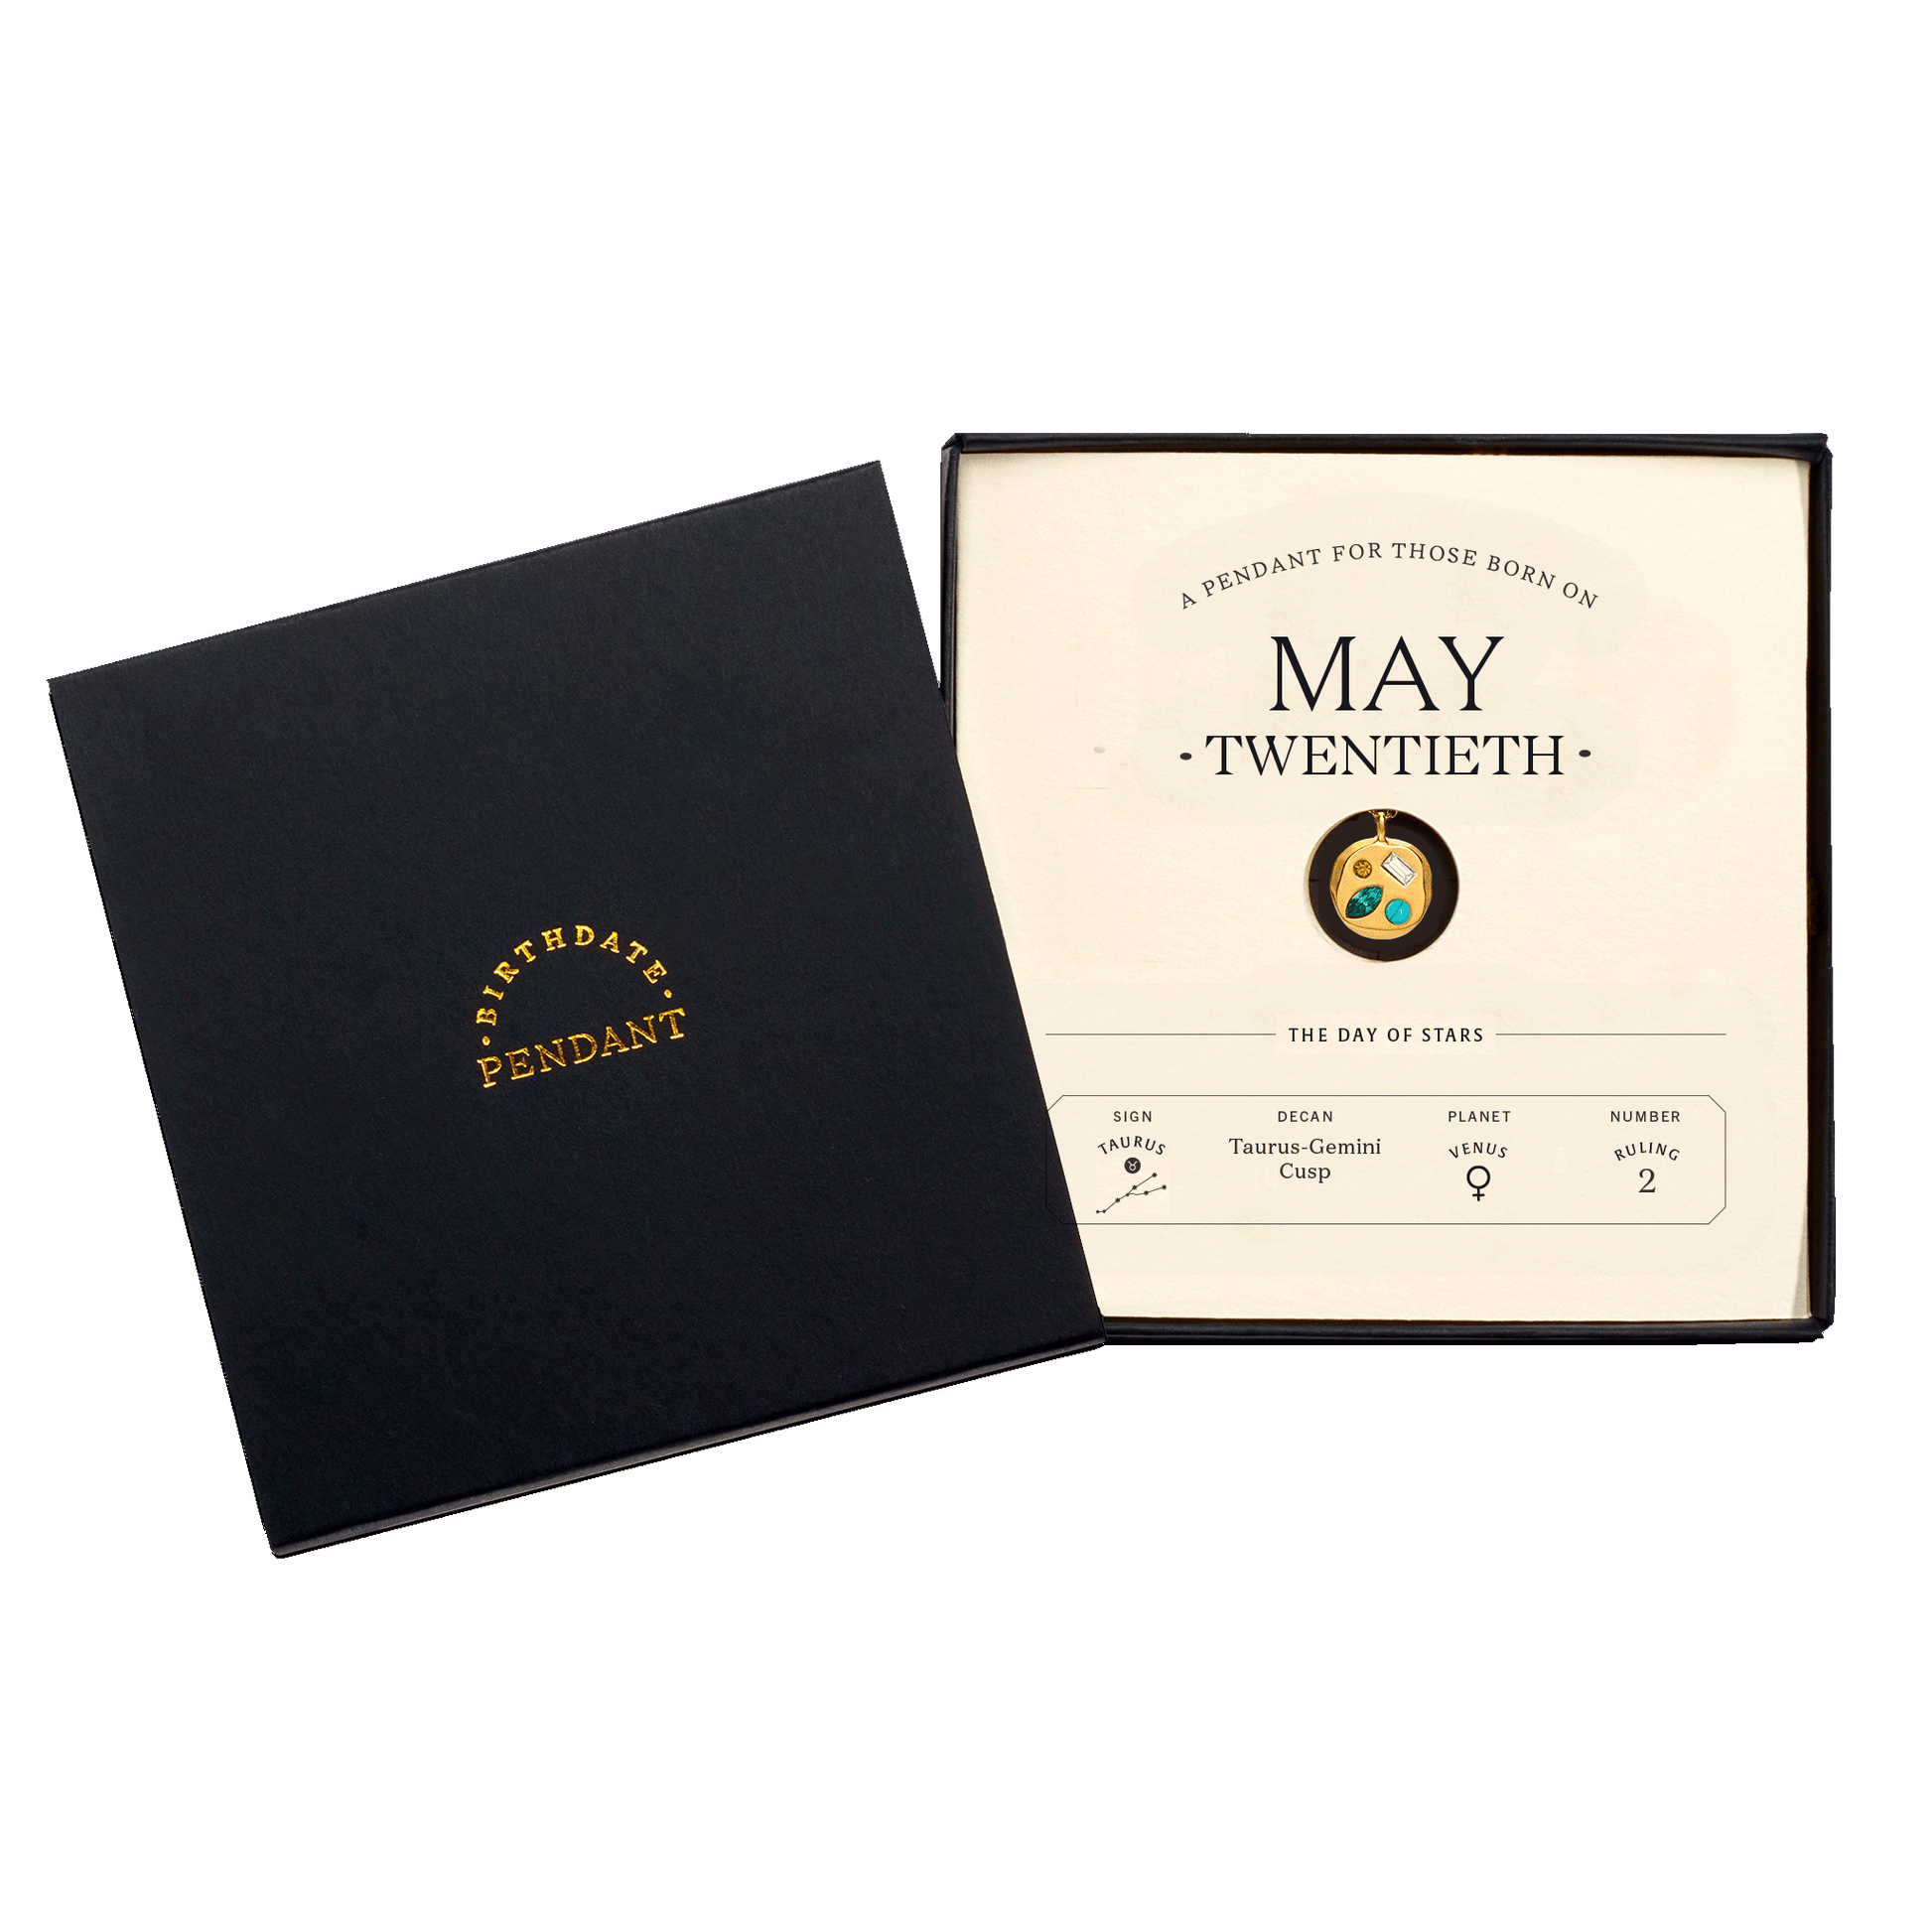 The May Twentieth Pendant inside its box